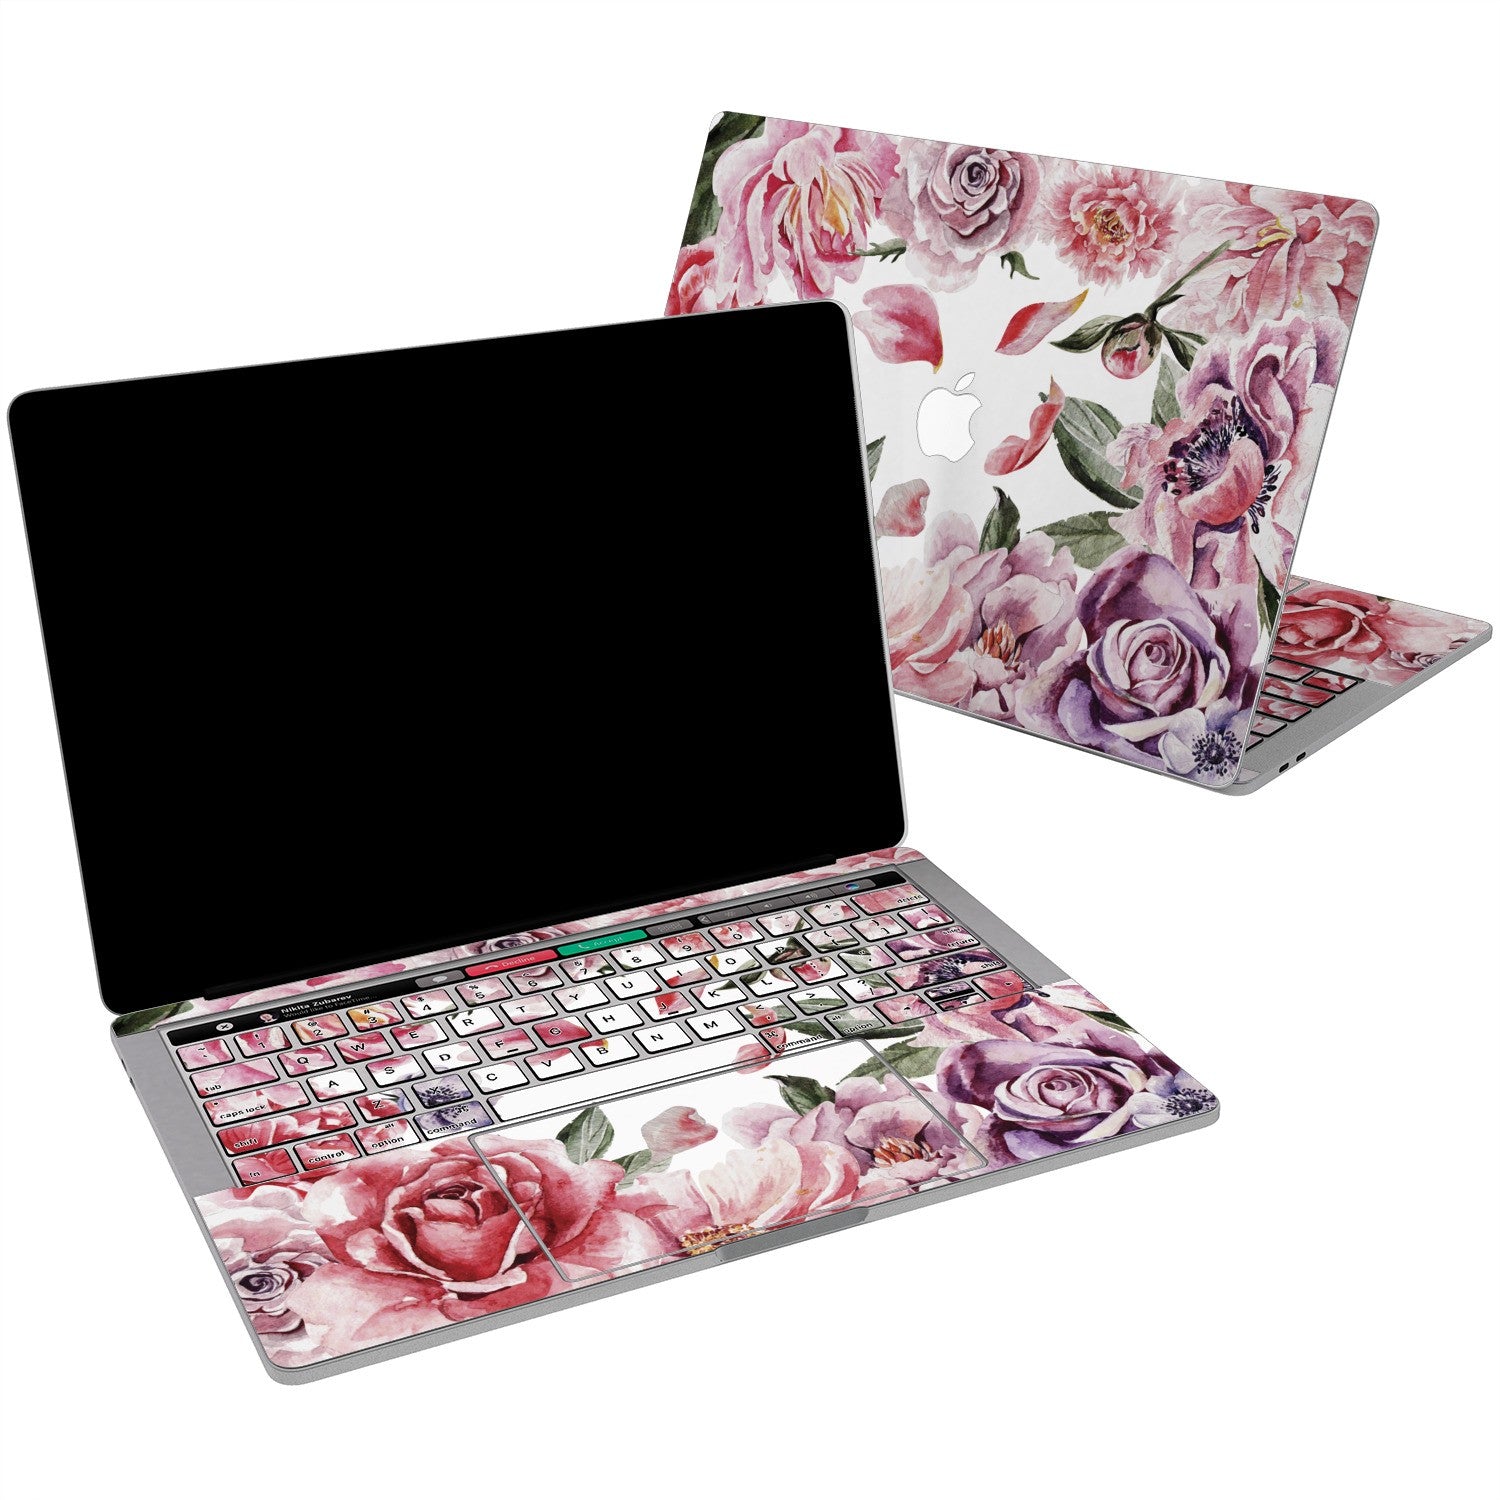 Lex Altern Vinyl MacBook Skin Red Roses for your Laptop Apple Macbook.